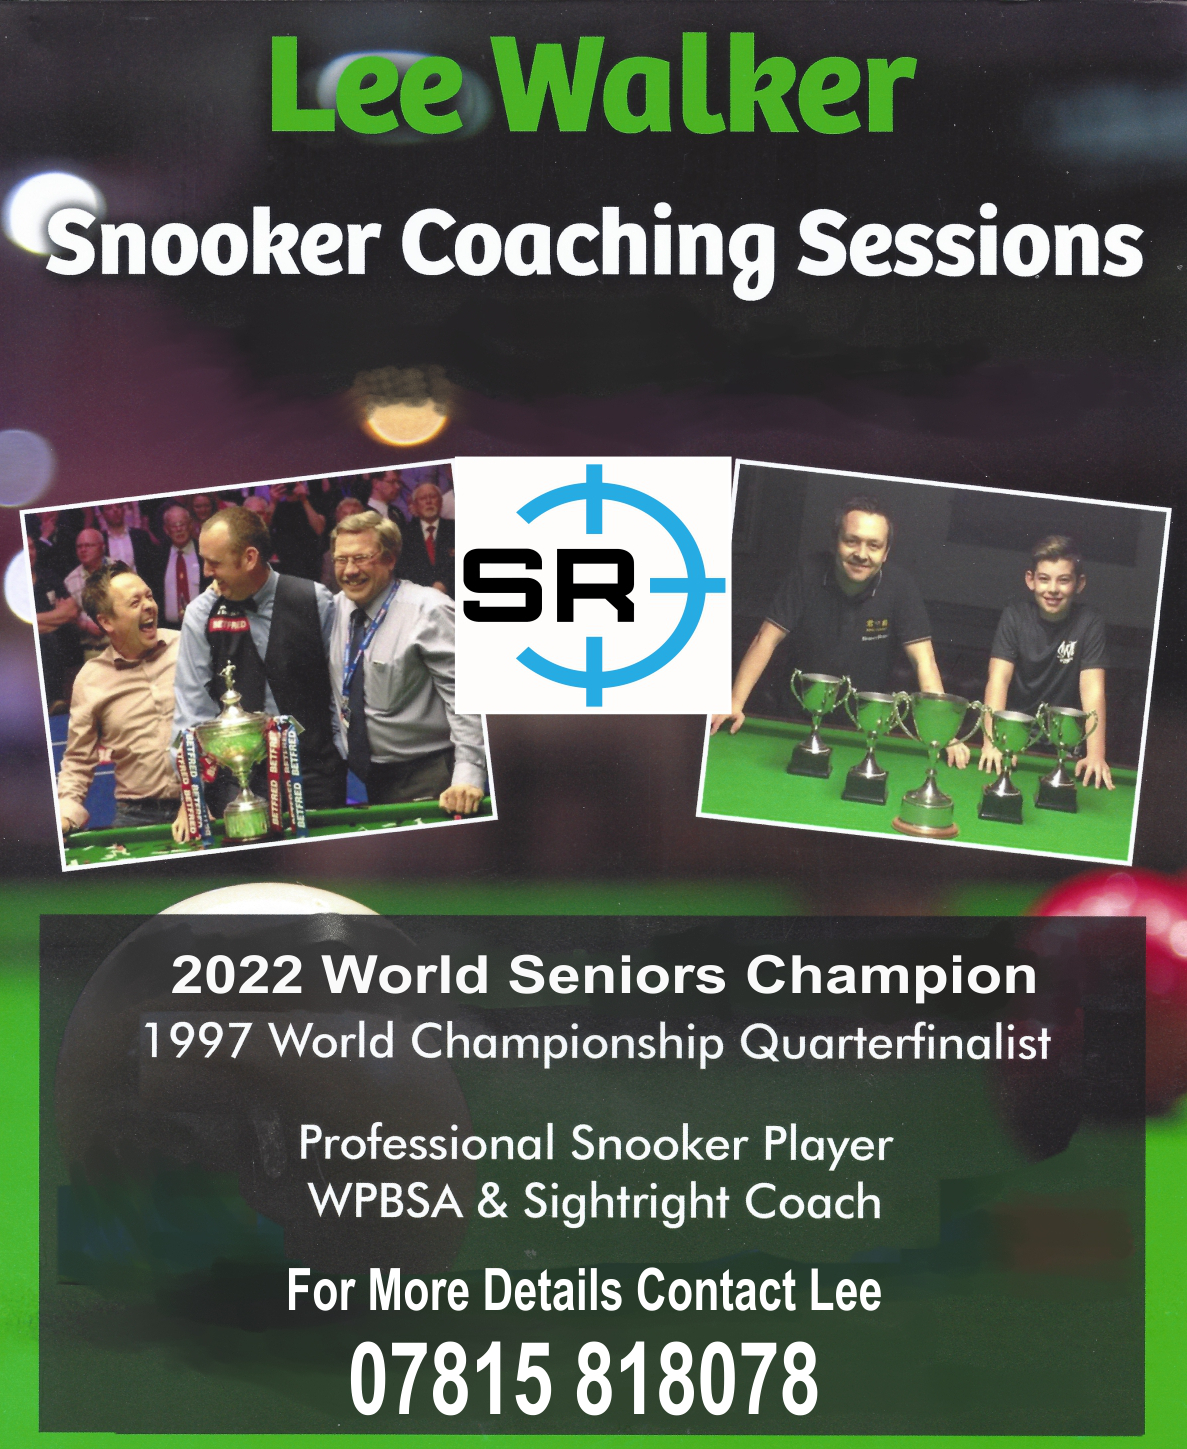 Lee Walker3 Snooker Coaching